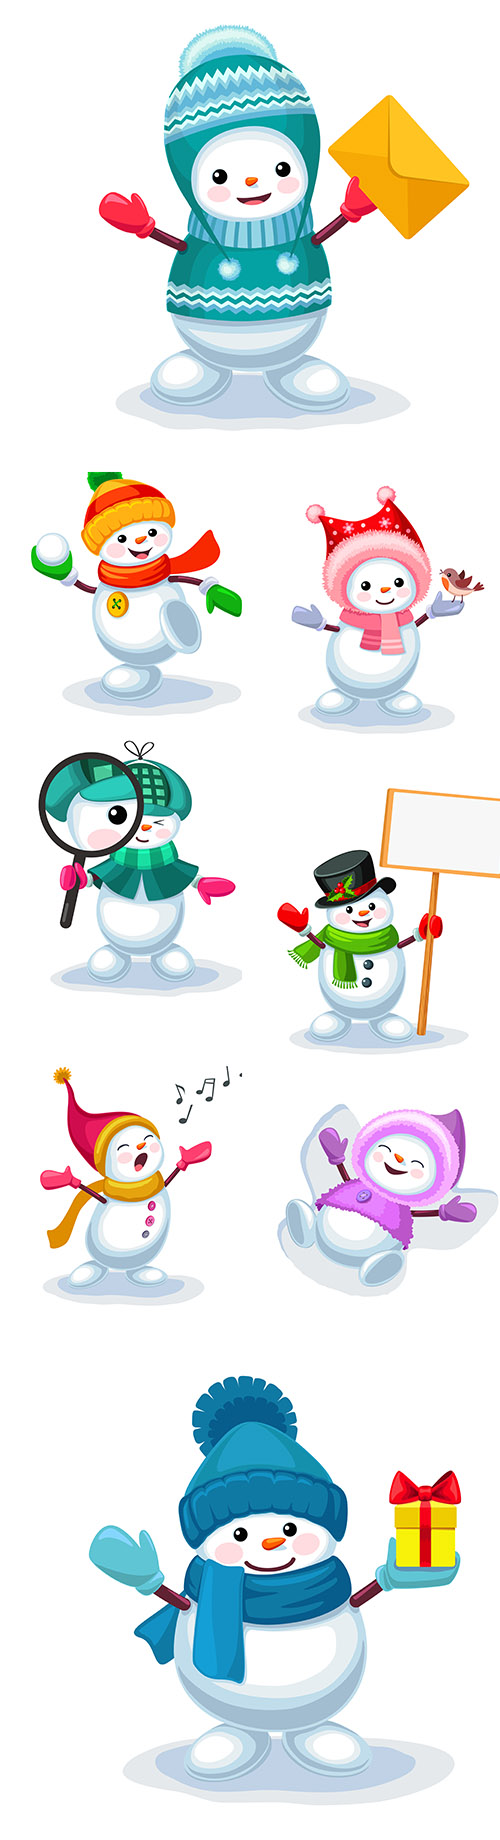 Cute snowman playing snowballs